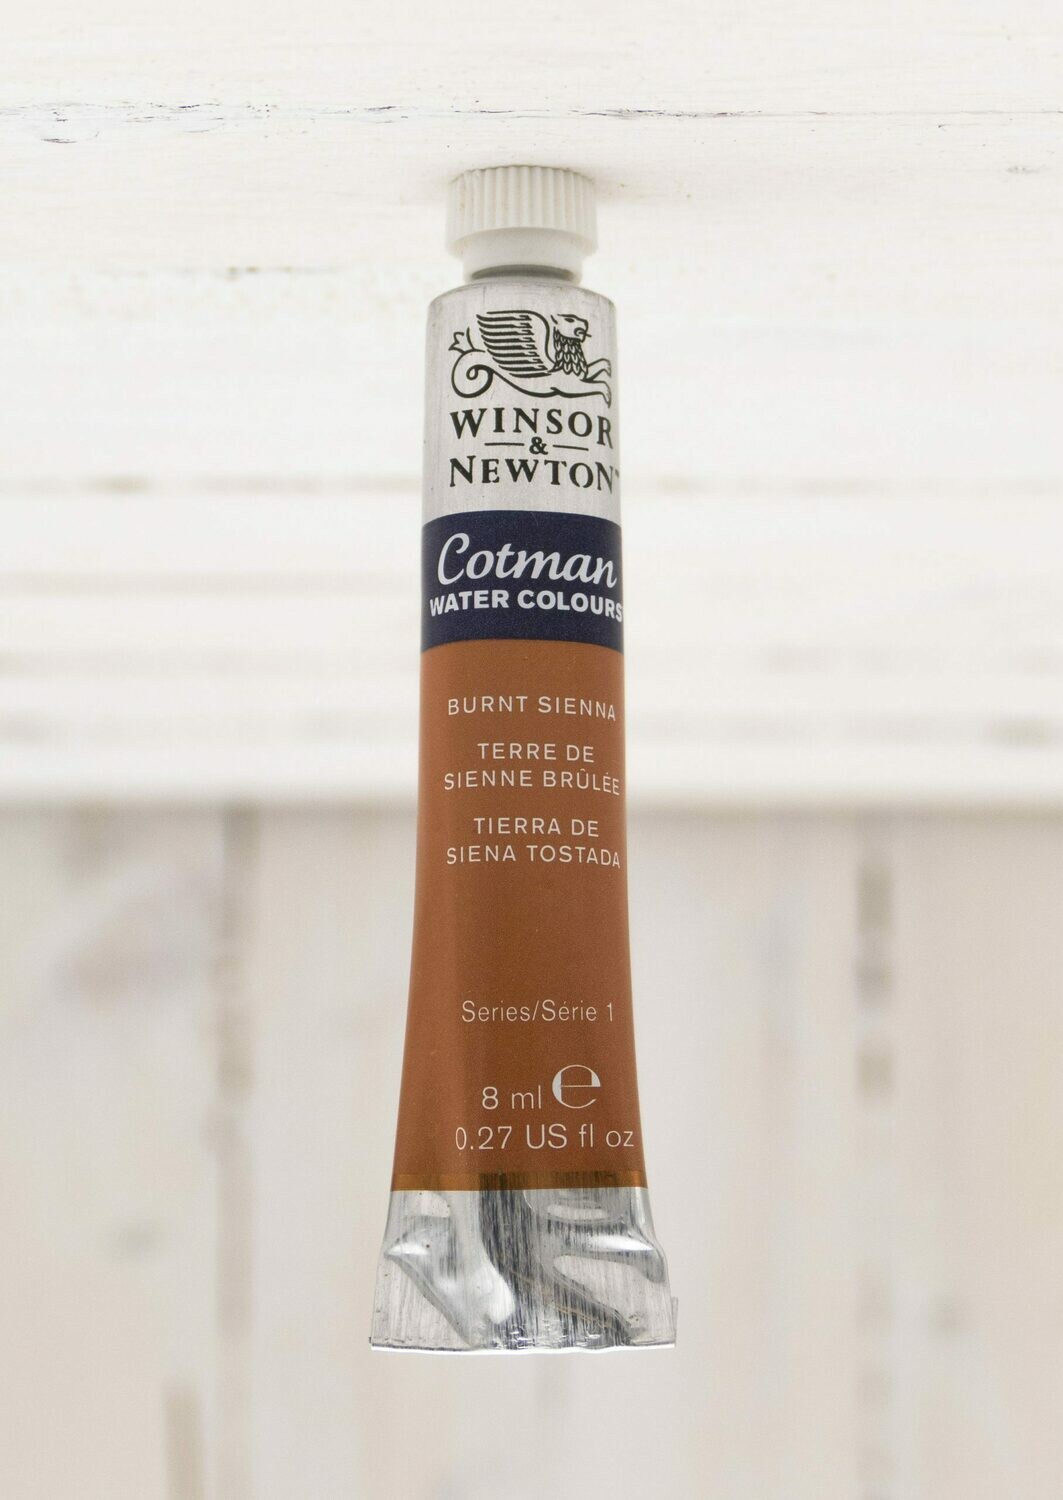 Winsor & Newton Cotman Watercolor - 8 ml Tube - Burnt Sienna